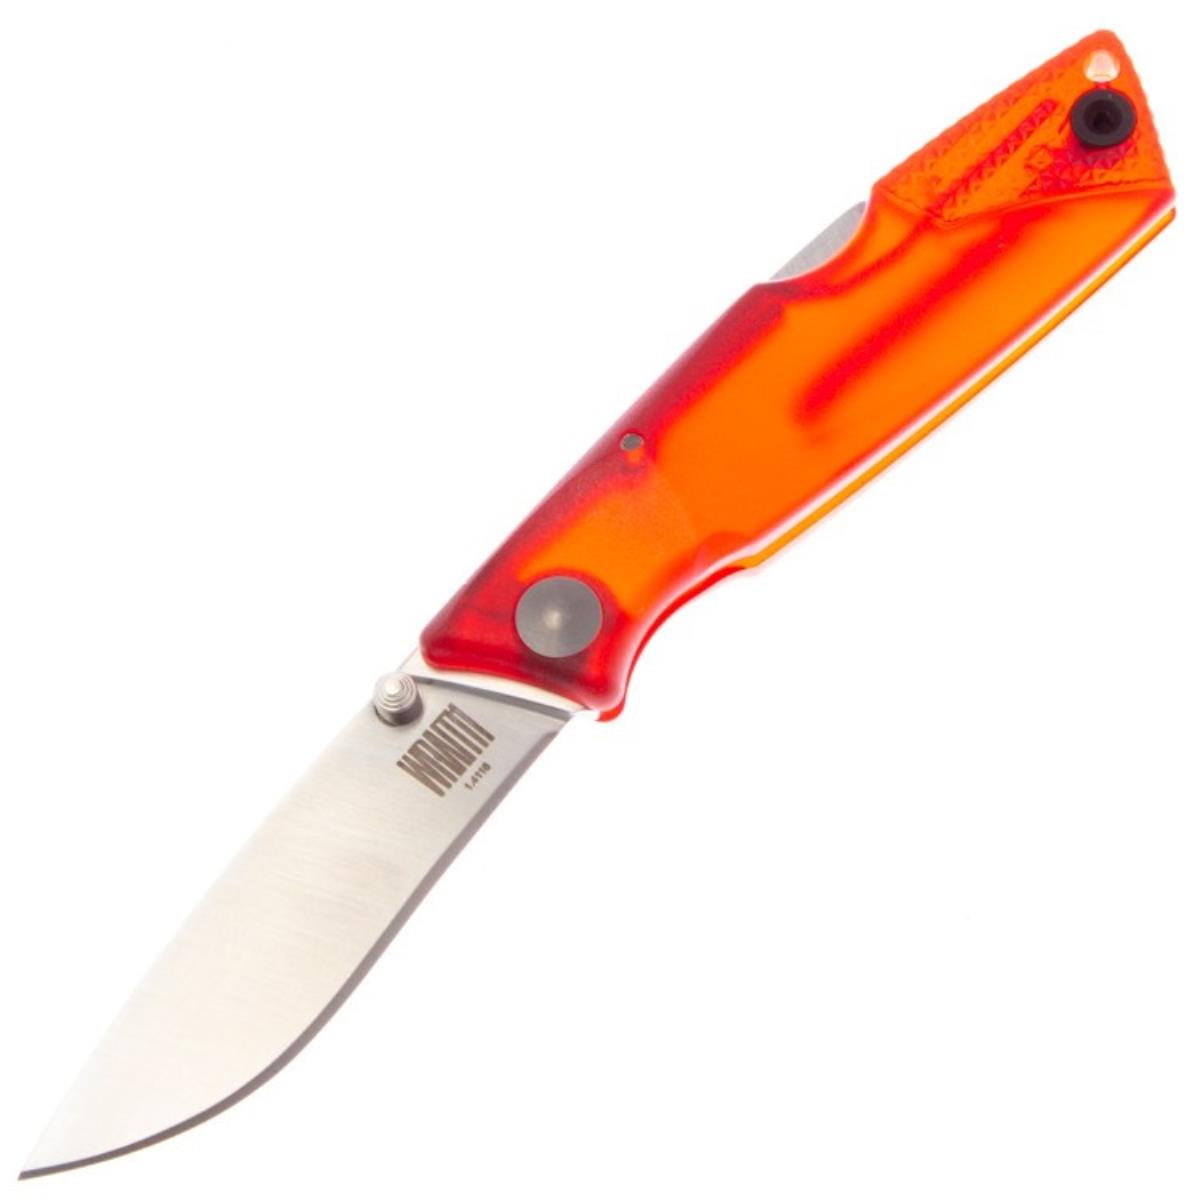 Нож Wraith Ice Series Fire складн.,красная полимерная рукоять, клинок AUS8 (8798RED)  ONTARIO арбузный нож ontario сталь 440c рукоять термопластик zytel® красно синий